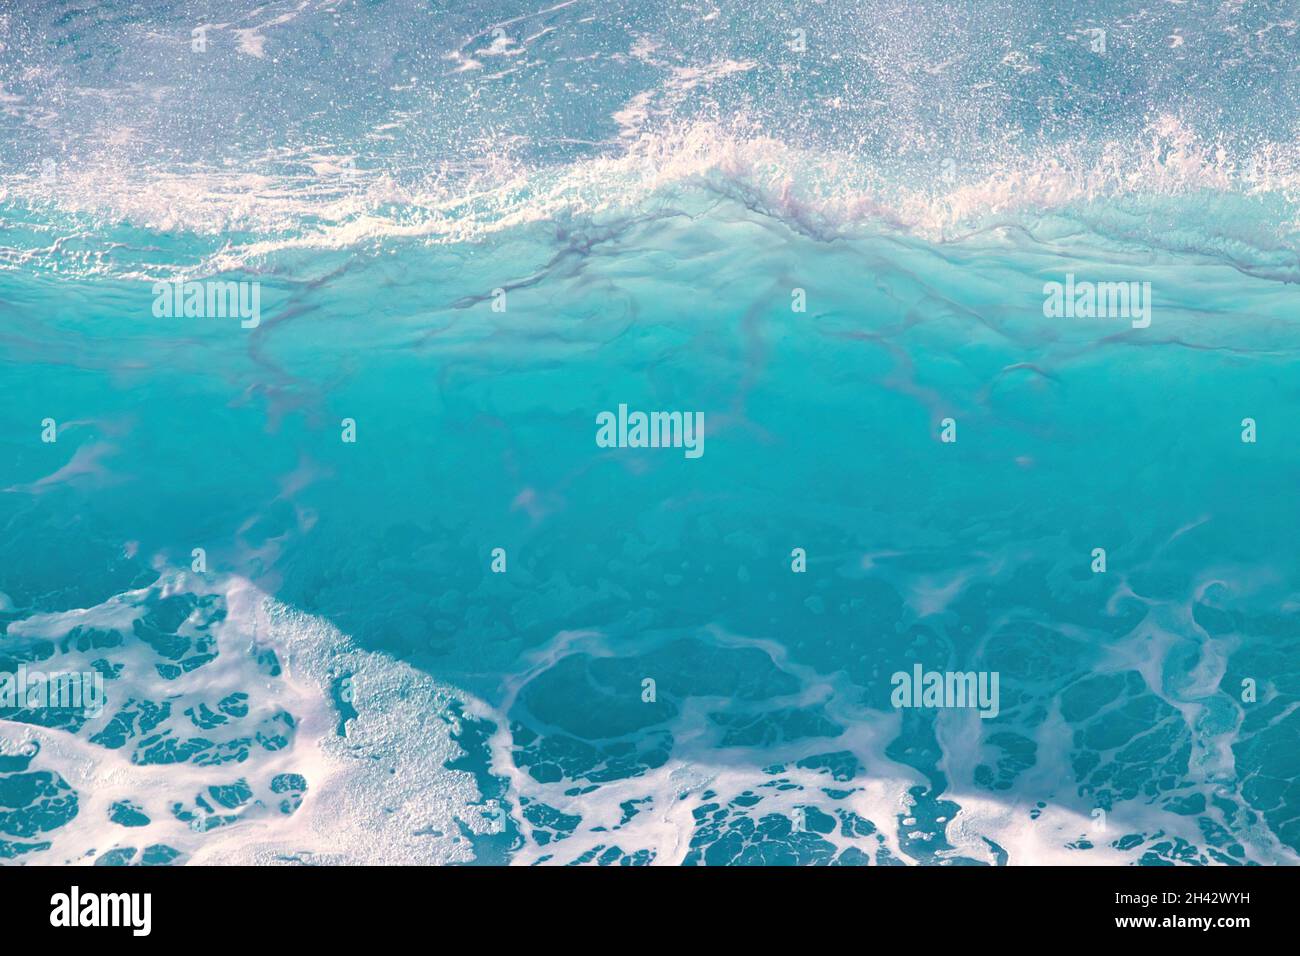 Unberührte, aquamarinfarbene Meereswelle, die bricht. Stockfoto